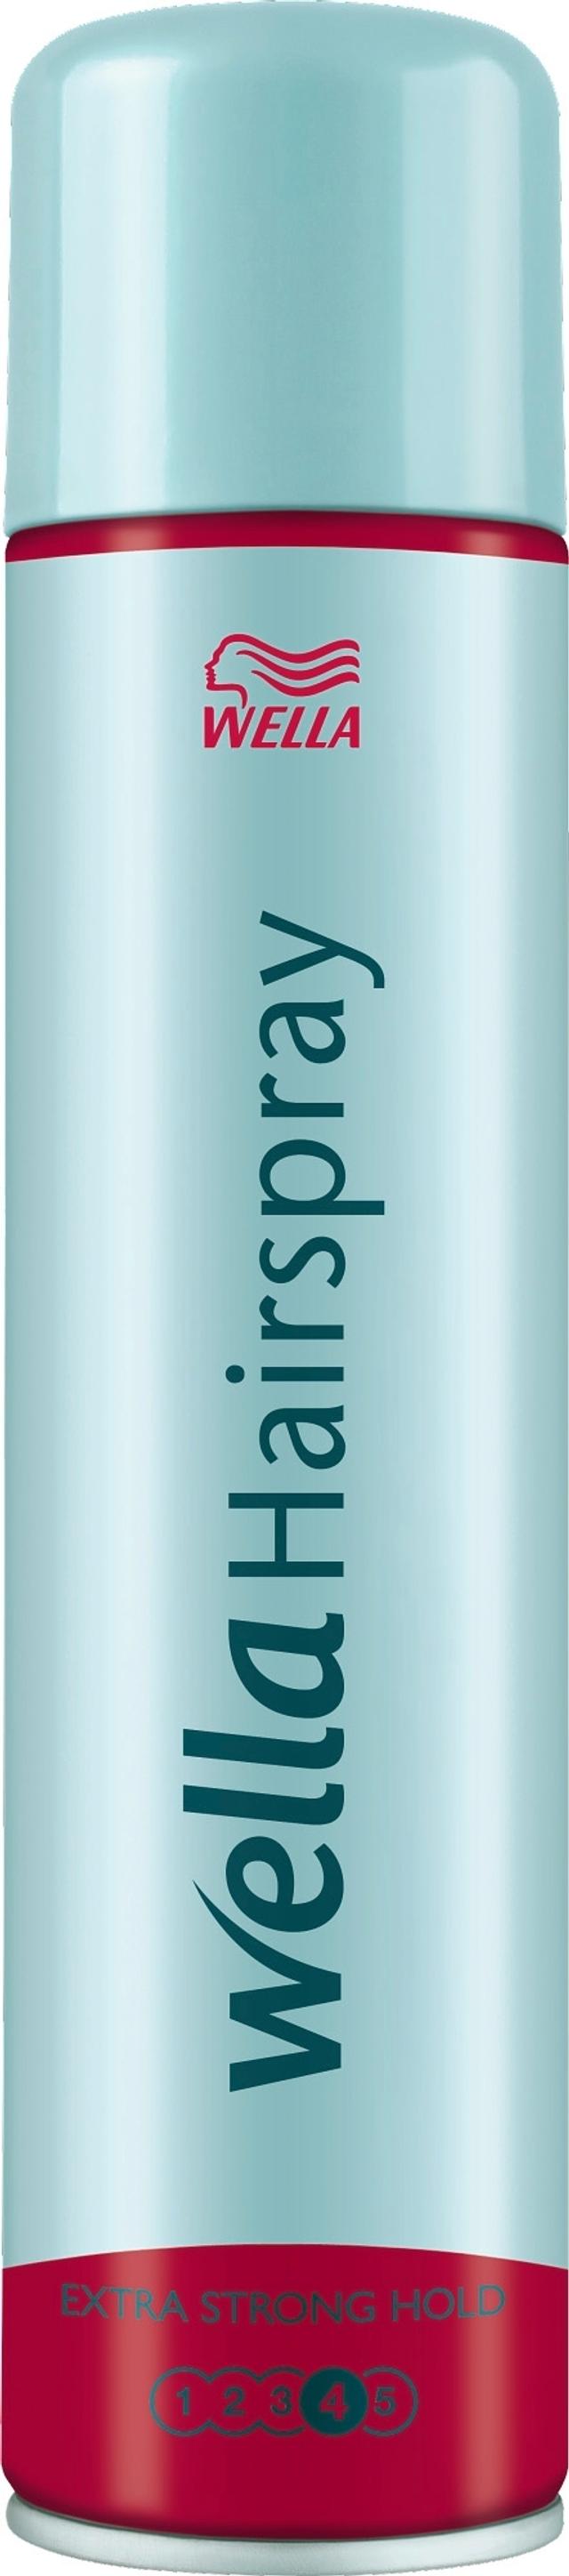 Wella Classic Hairspray extra strong hold 4 hiuskiinne 400 ml